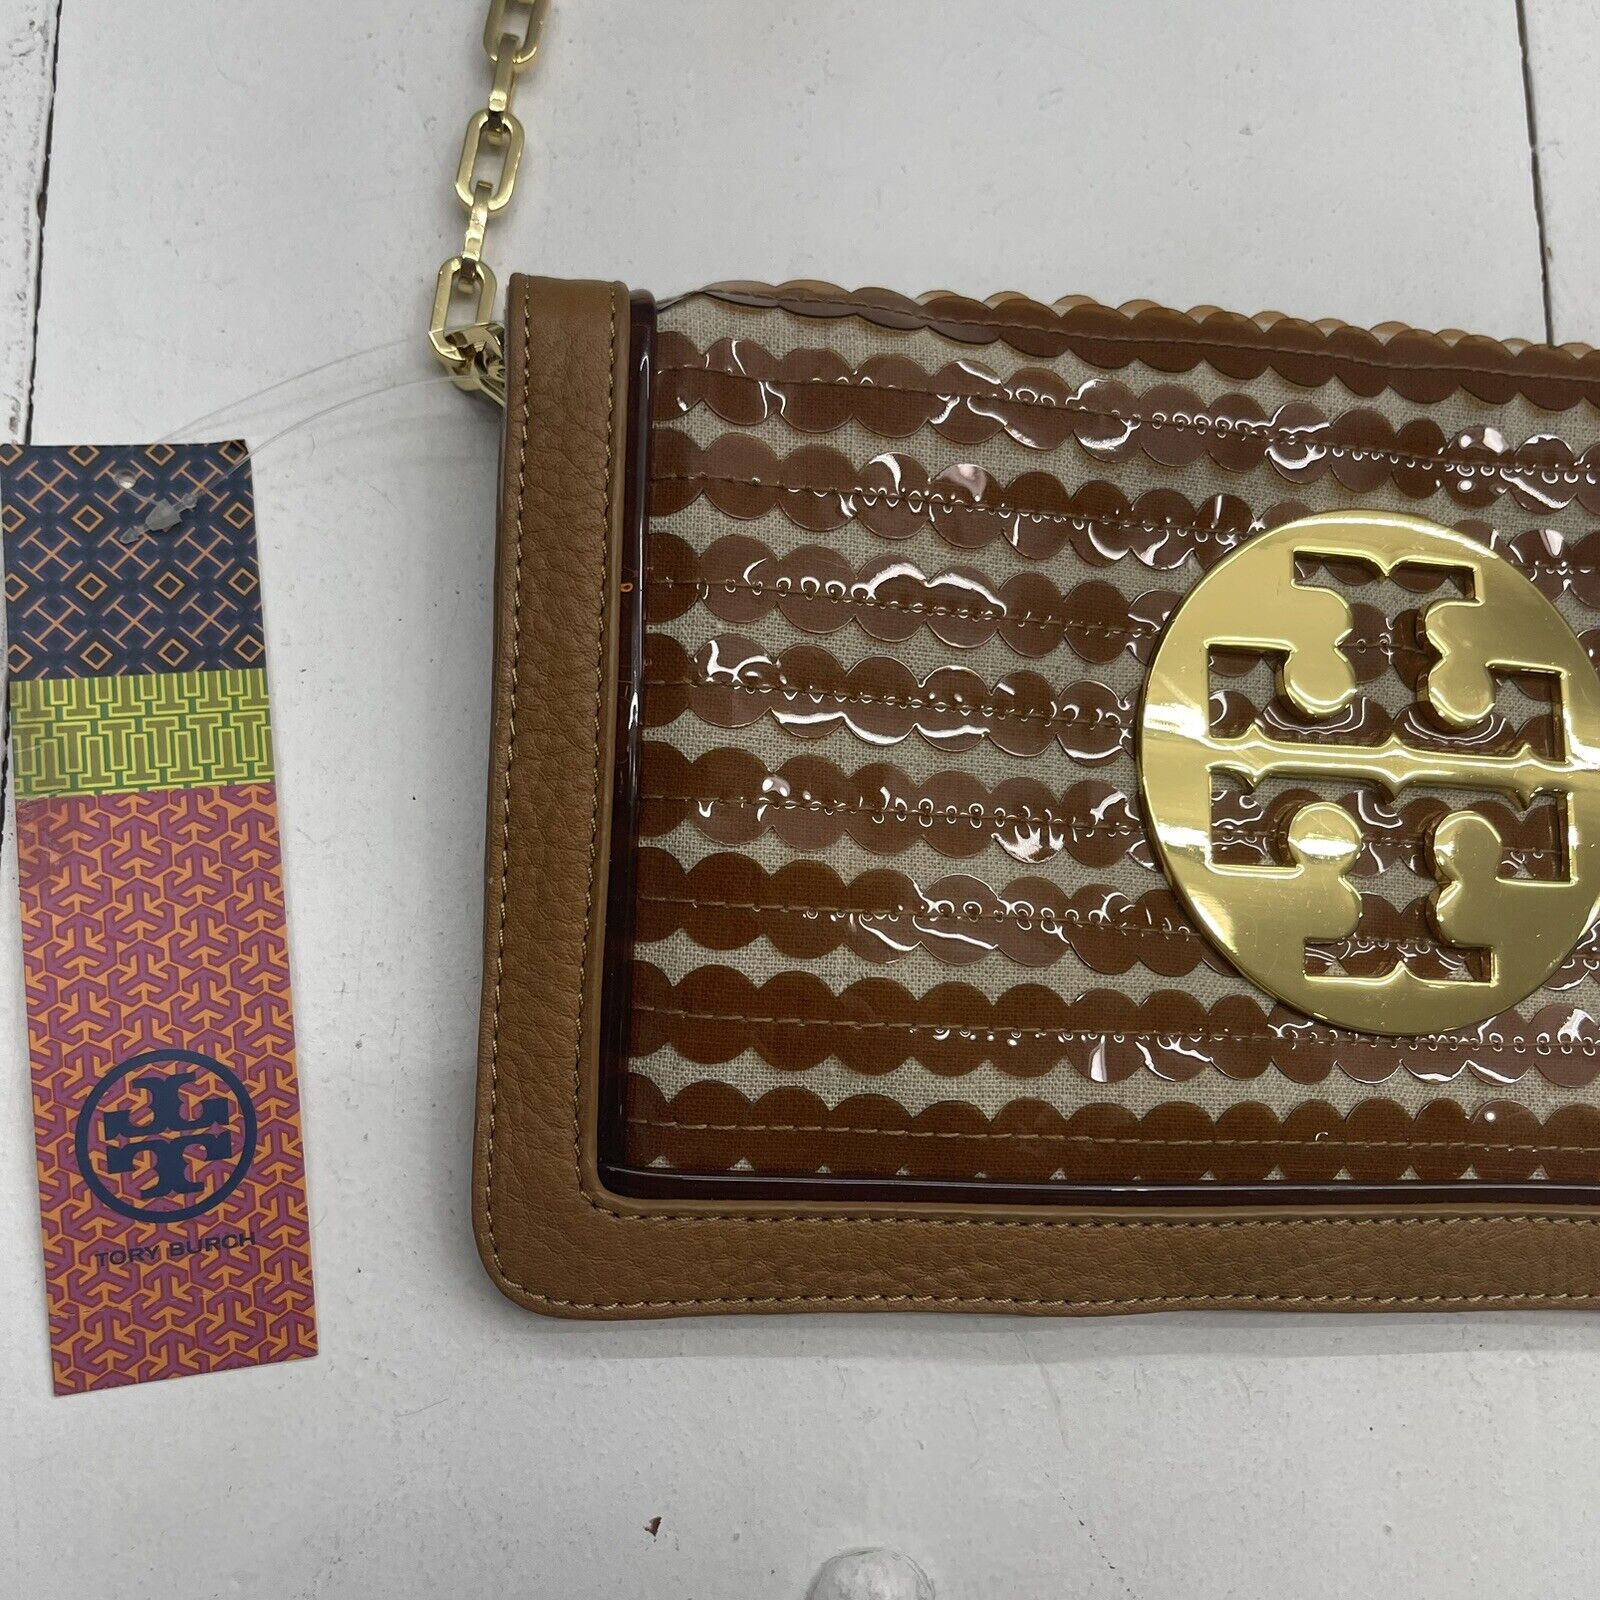 Tory Burch Kira Mini Chain Clutch | Tory burch handbags, Fashion bags,  Fashion obsession